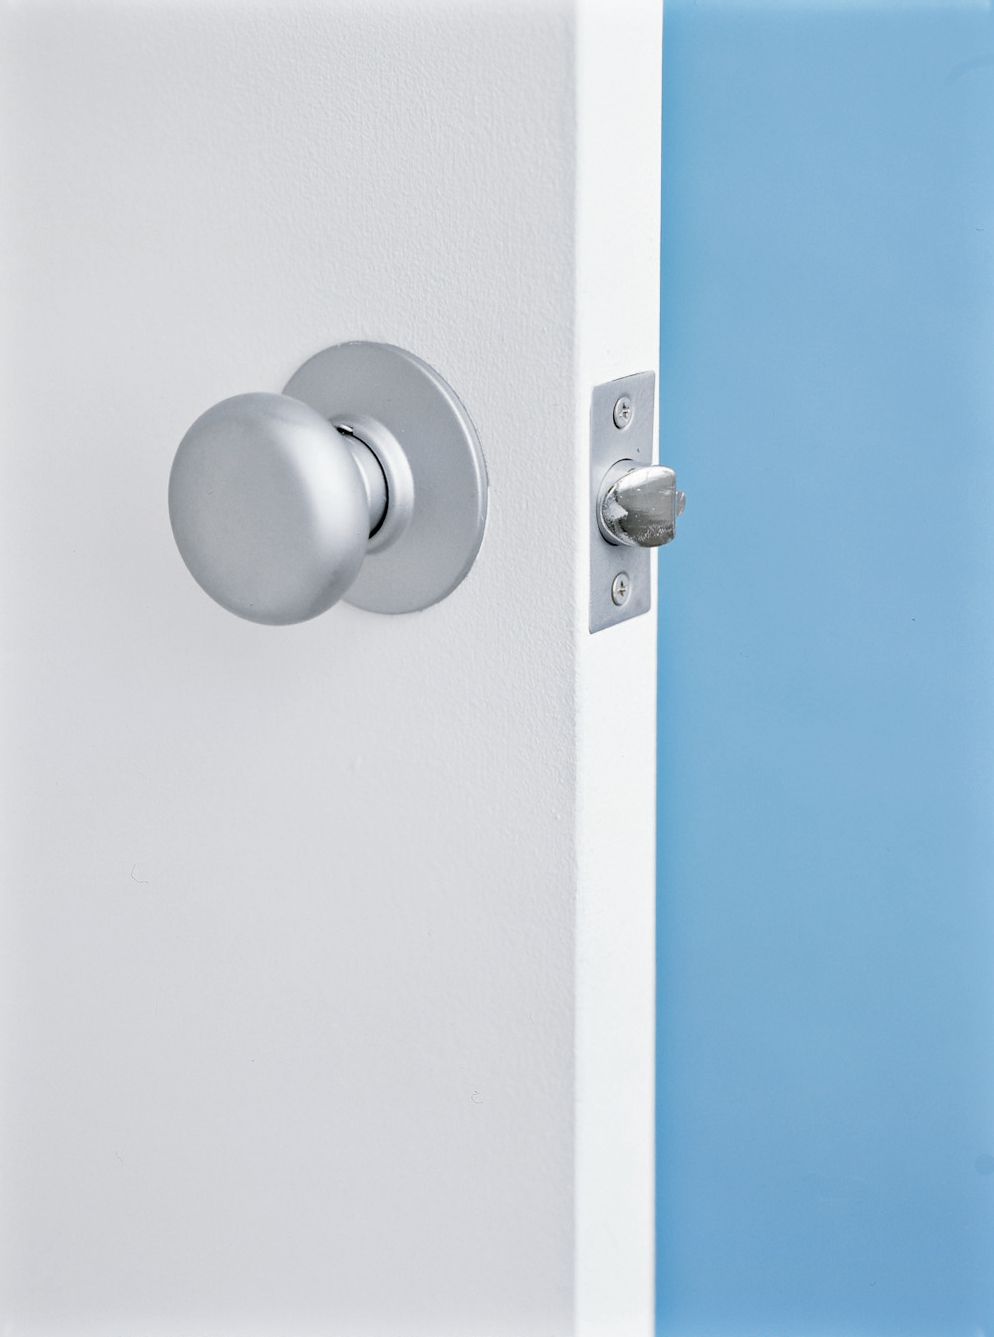 Silver doorknob